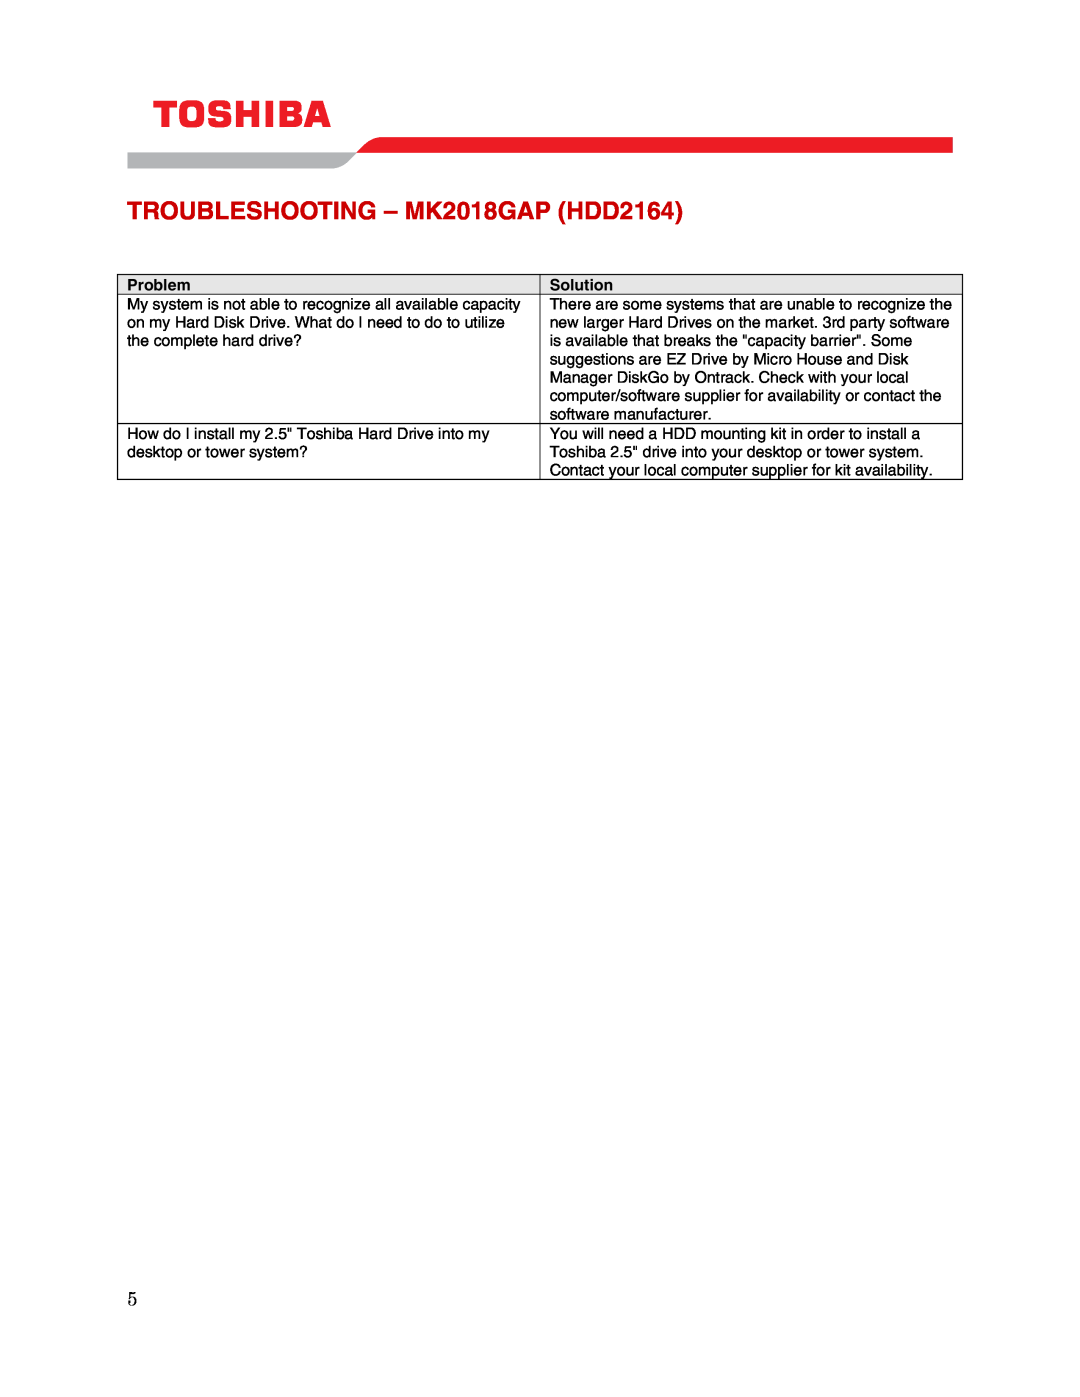 Toshiba user manual TROUBLESHOOTING - MK2018GAP HDD2164, Problem, Solution 